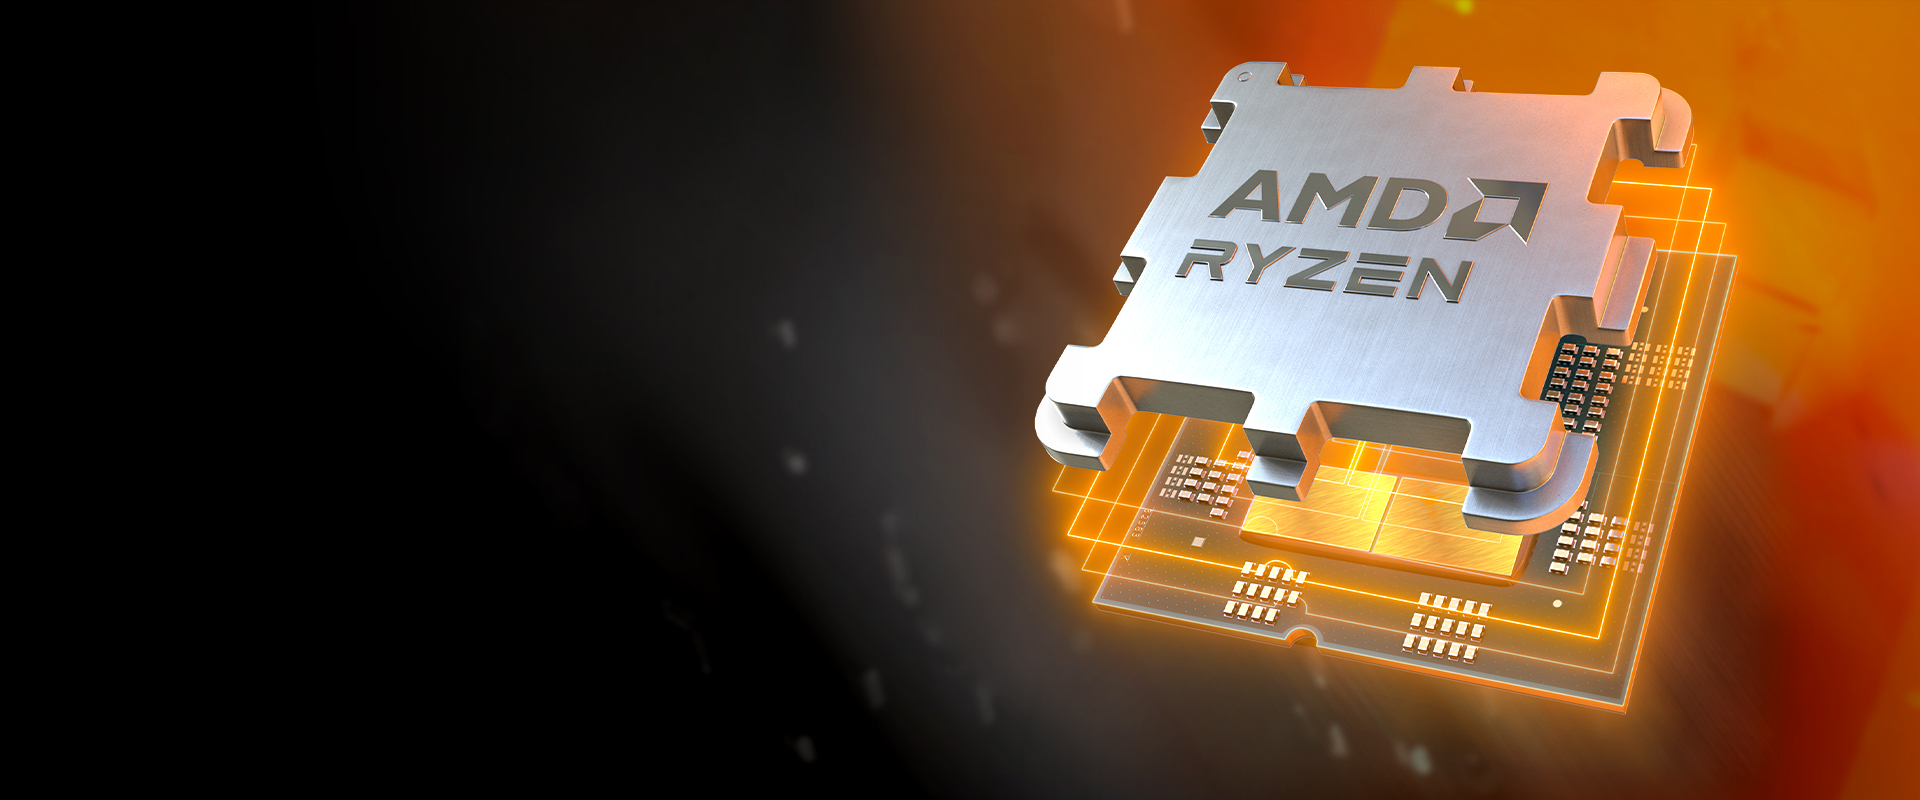 AMD Ryzen 7000 Series 3D